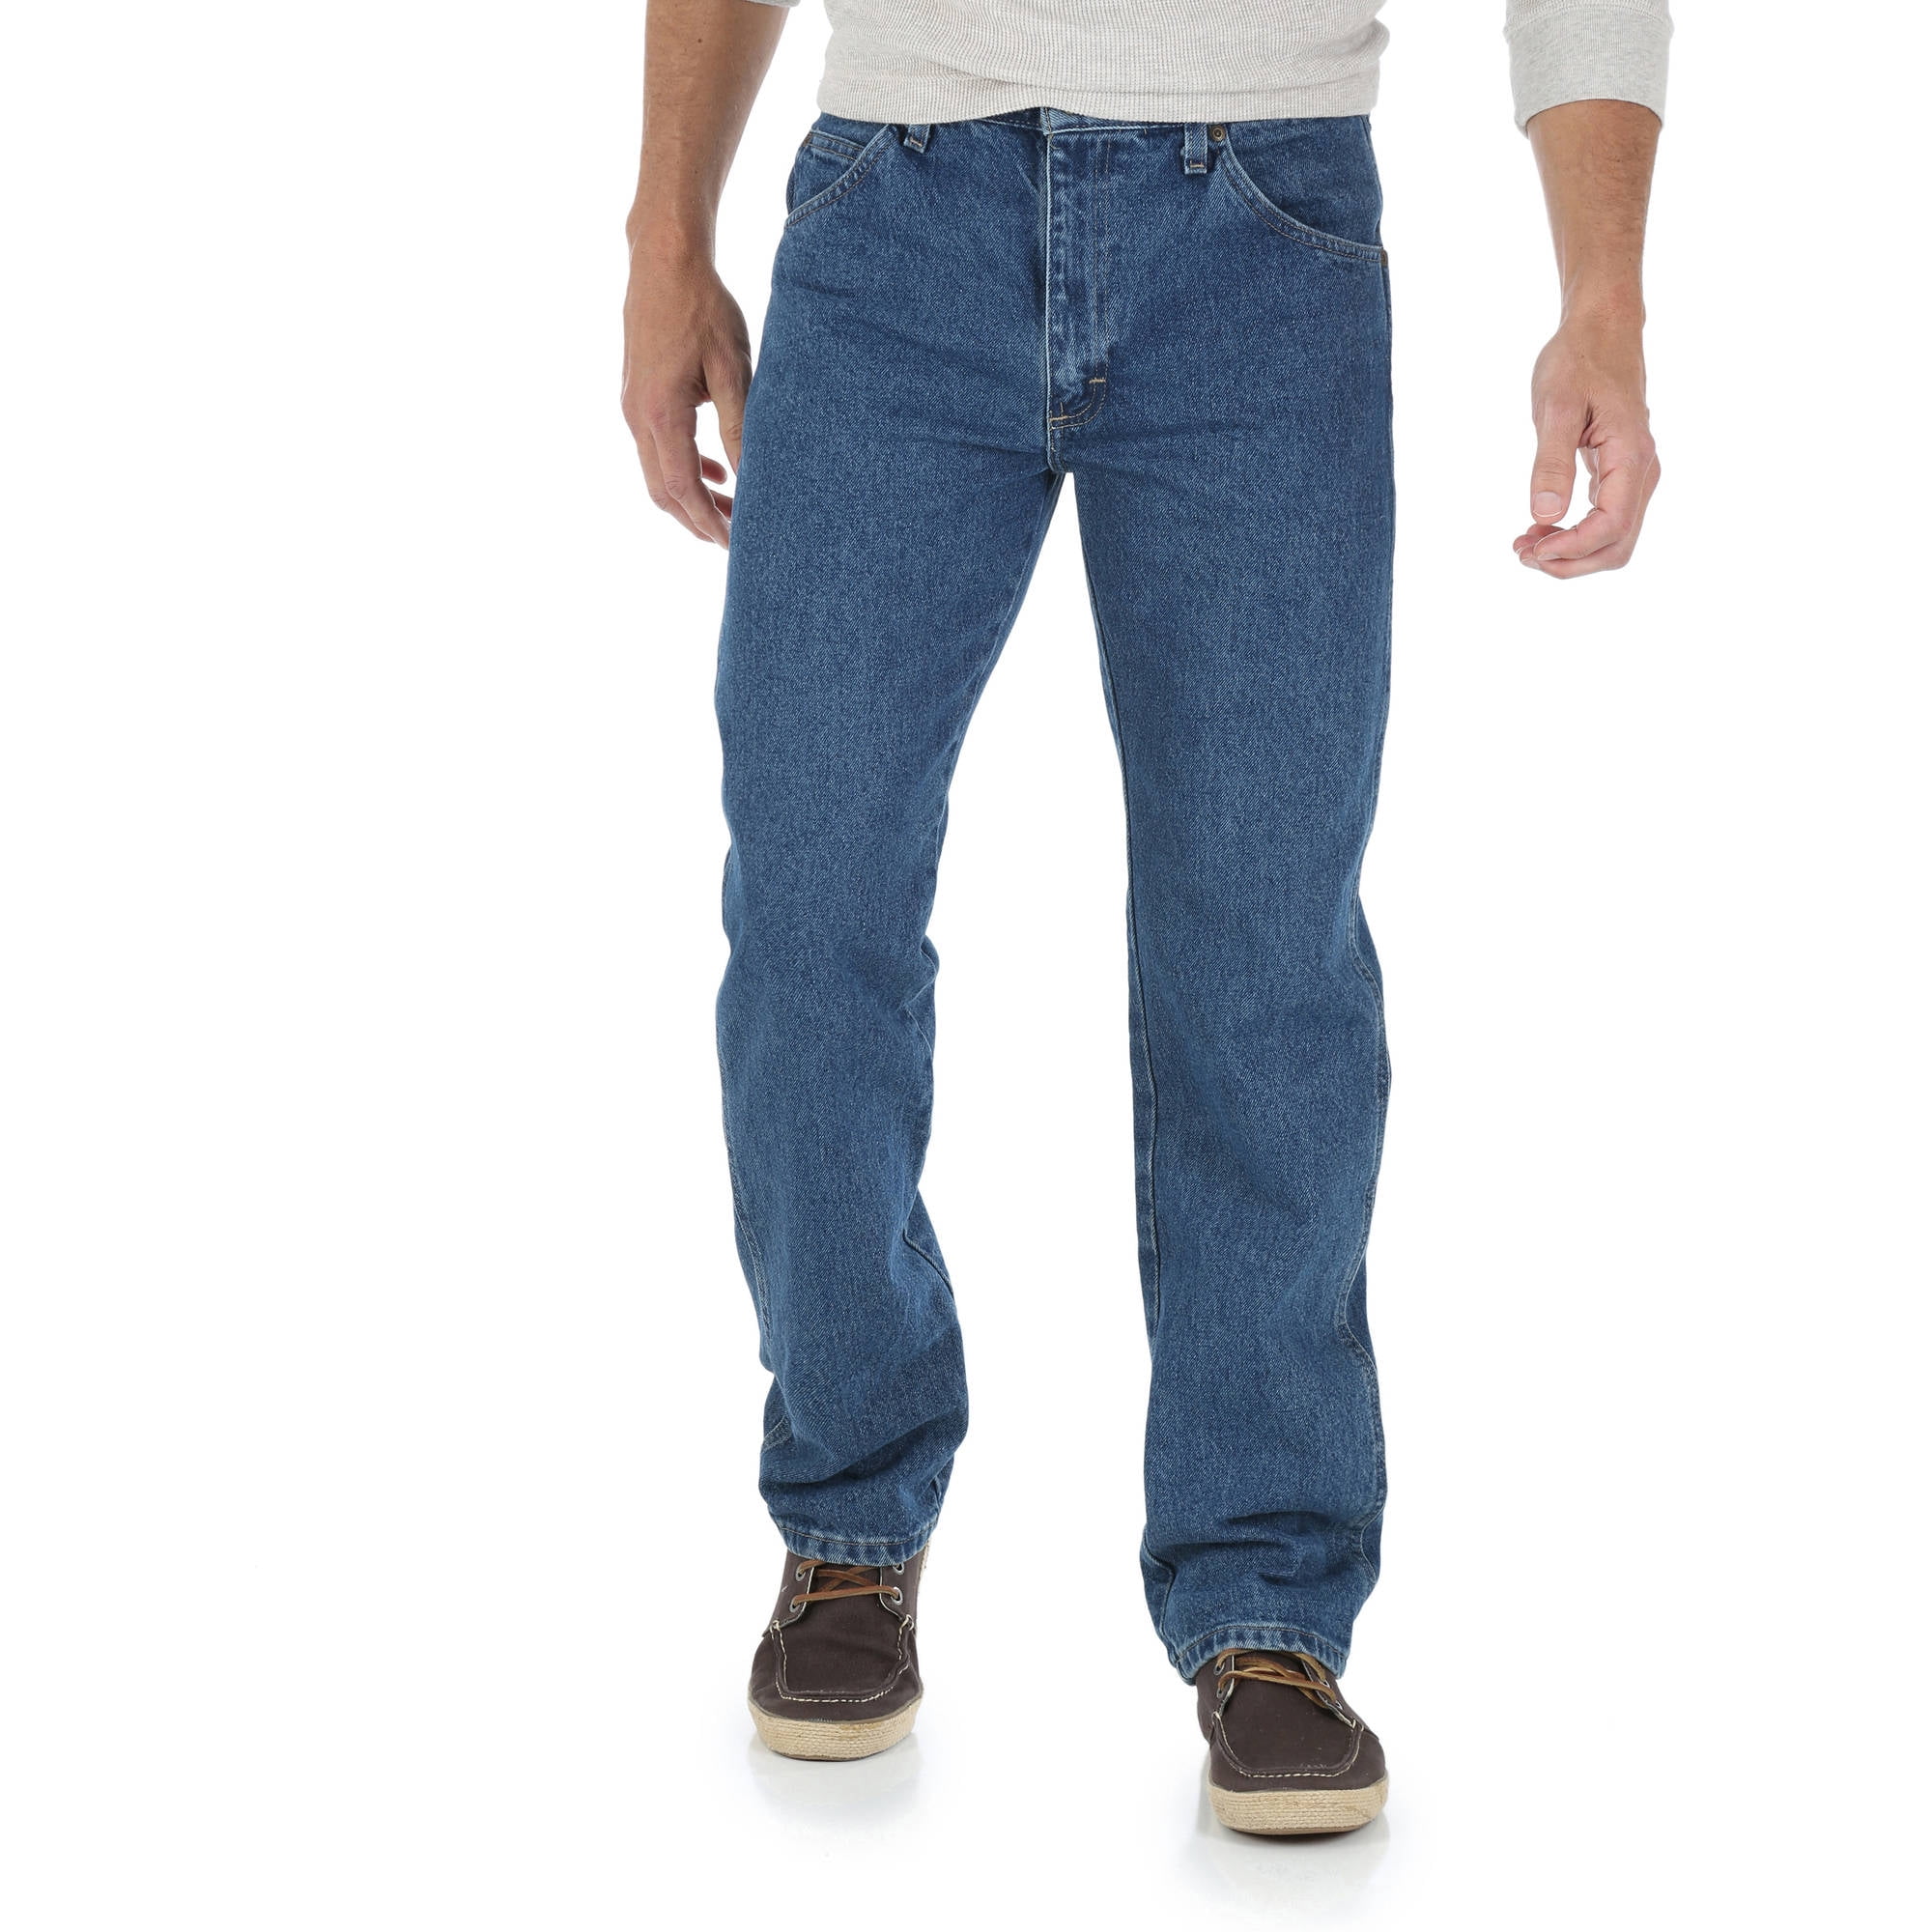 Wrangler Jeans Size Chart